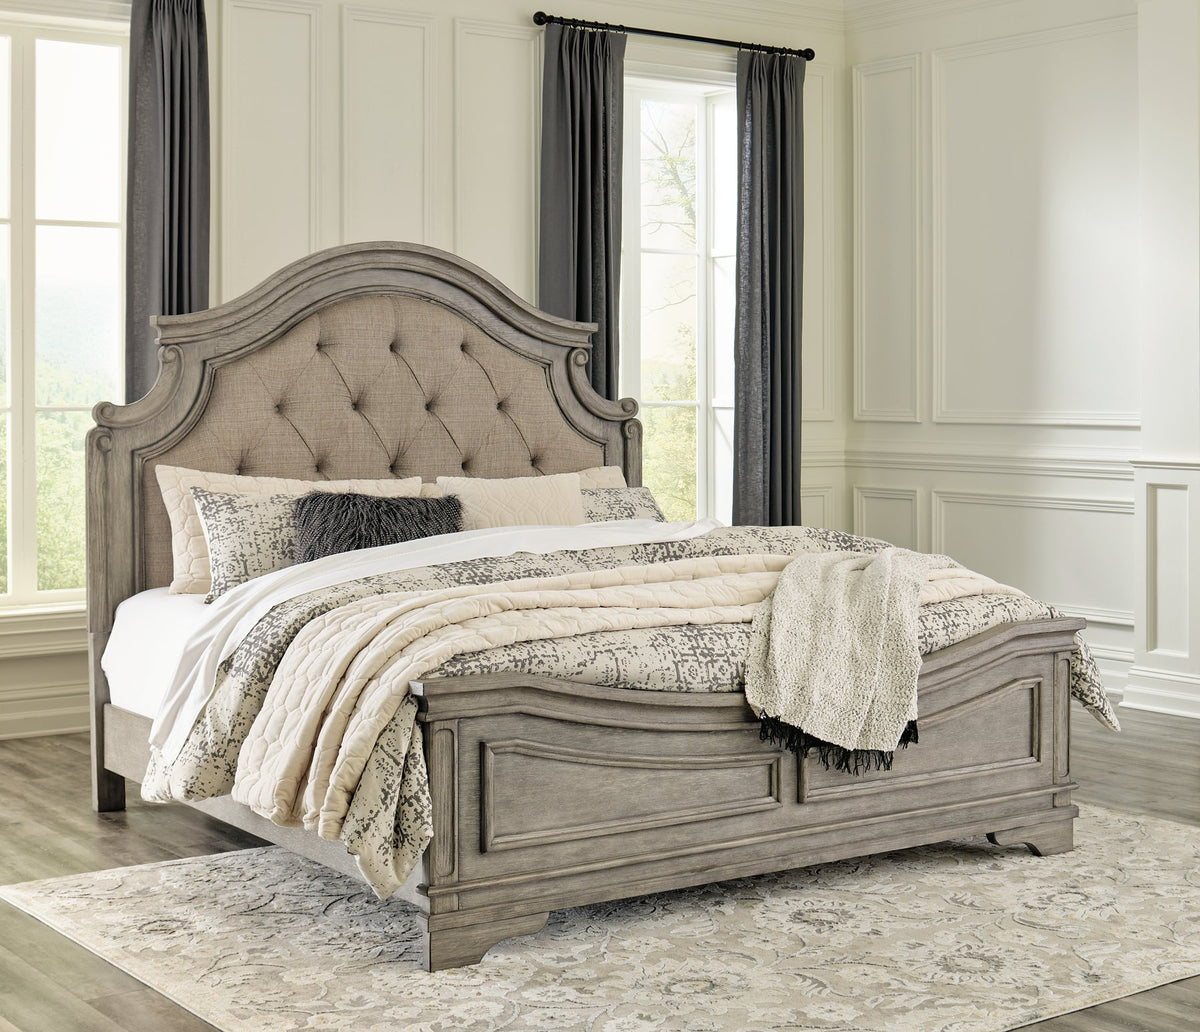 Lodenbay Bed  Half Price Furniture